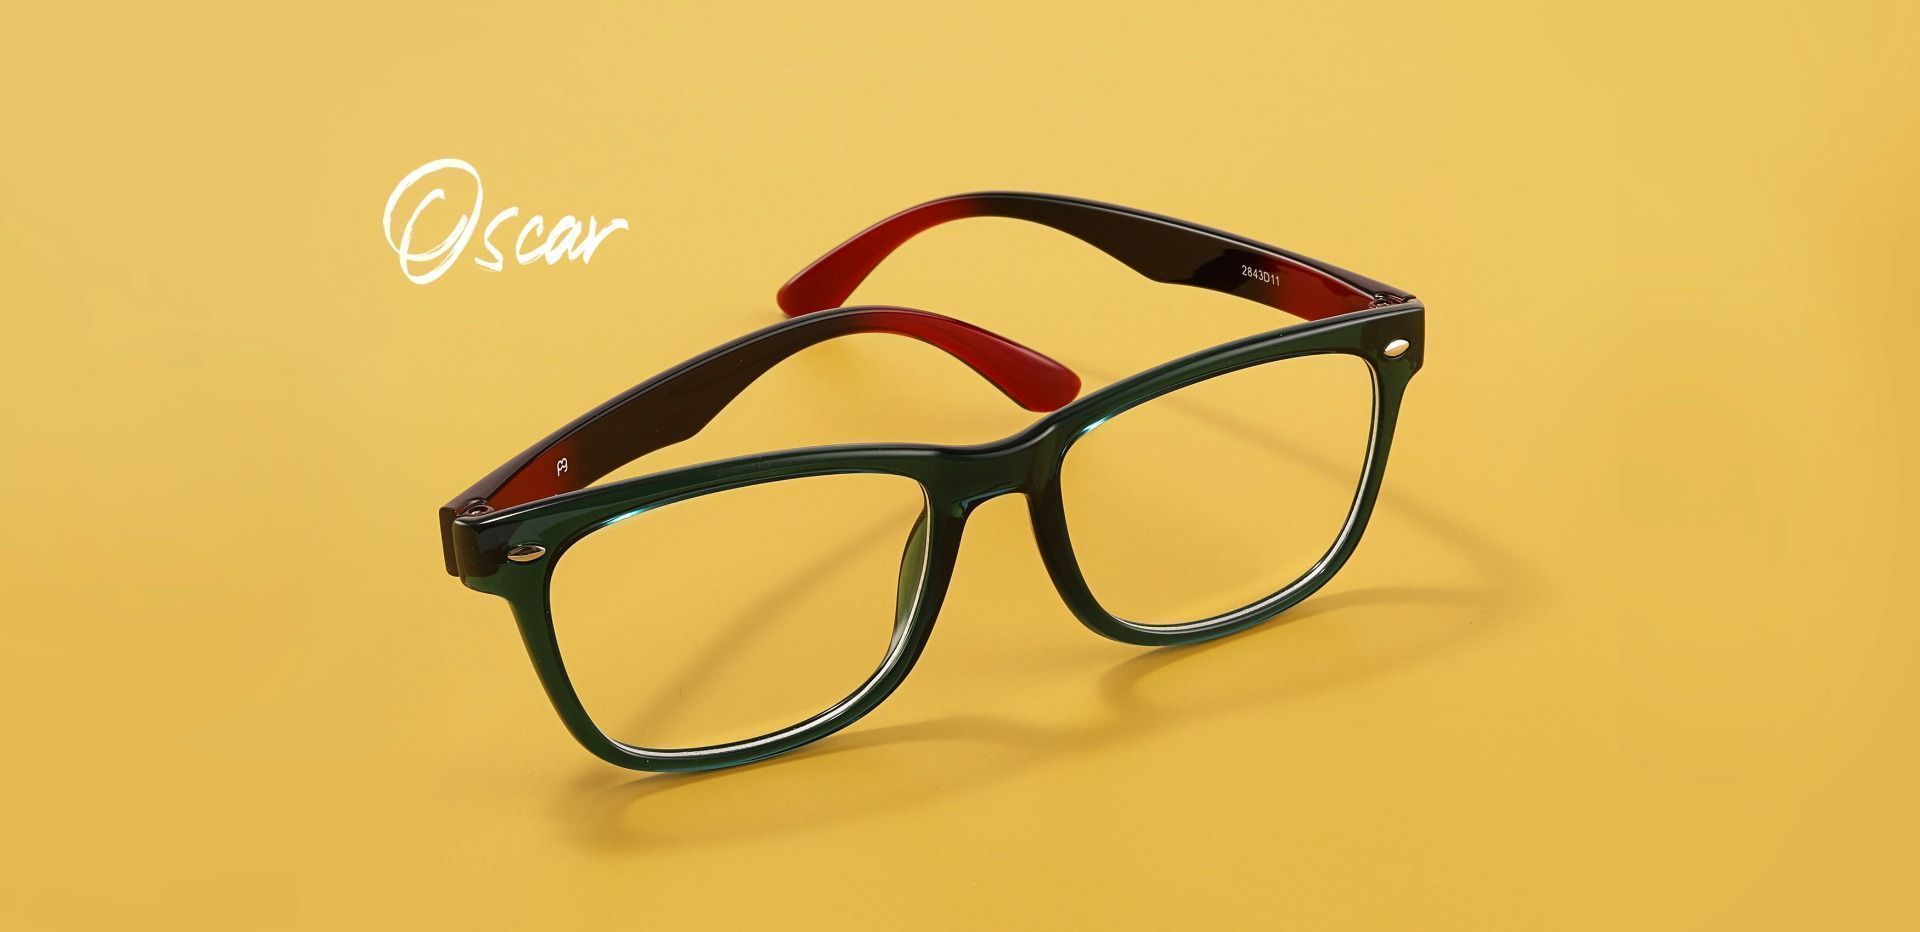 Oscar Rectangle Progressive Glasses - Green